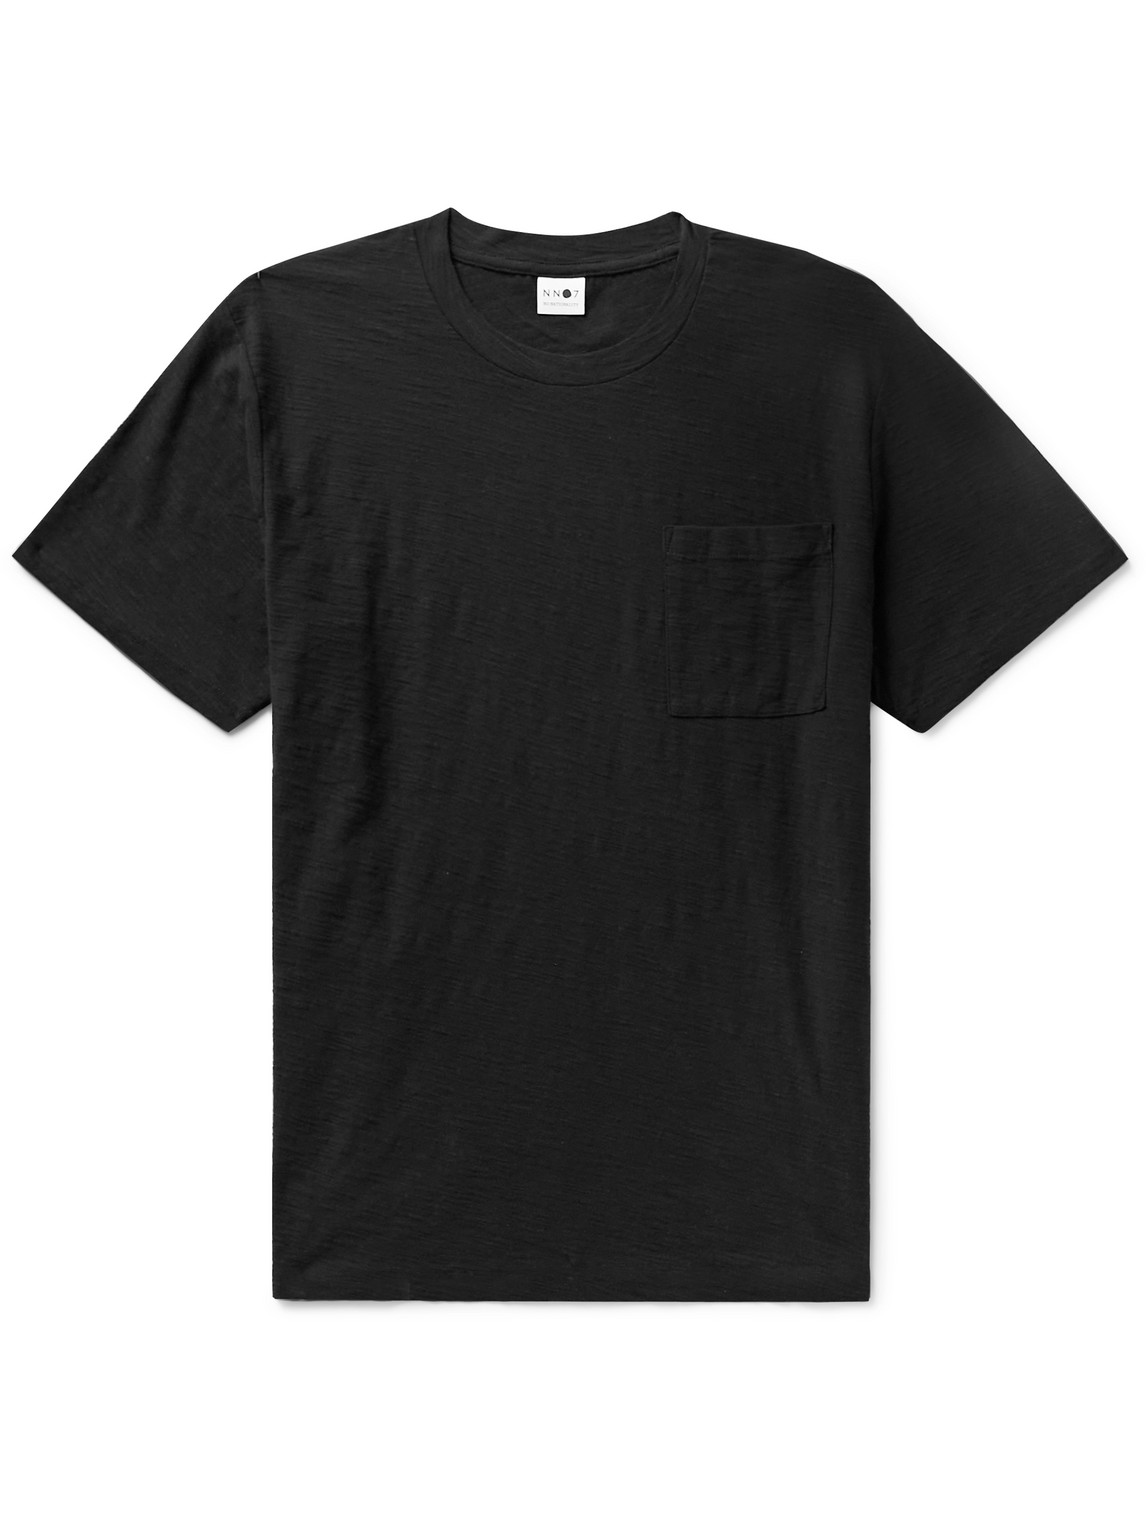 NN07 Aspen Slub Cotton-Jersey T-Shirt